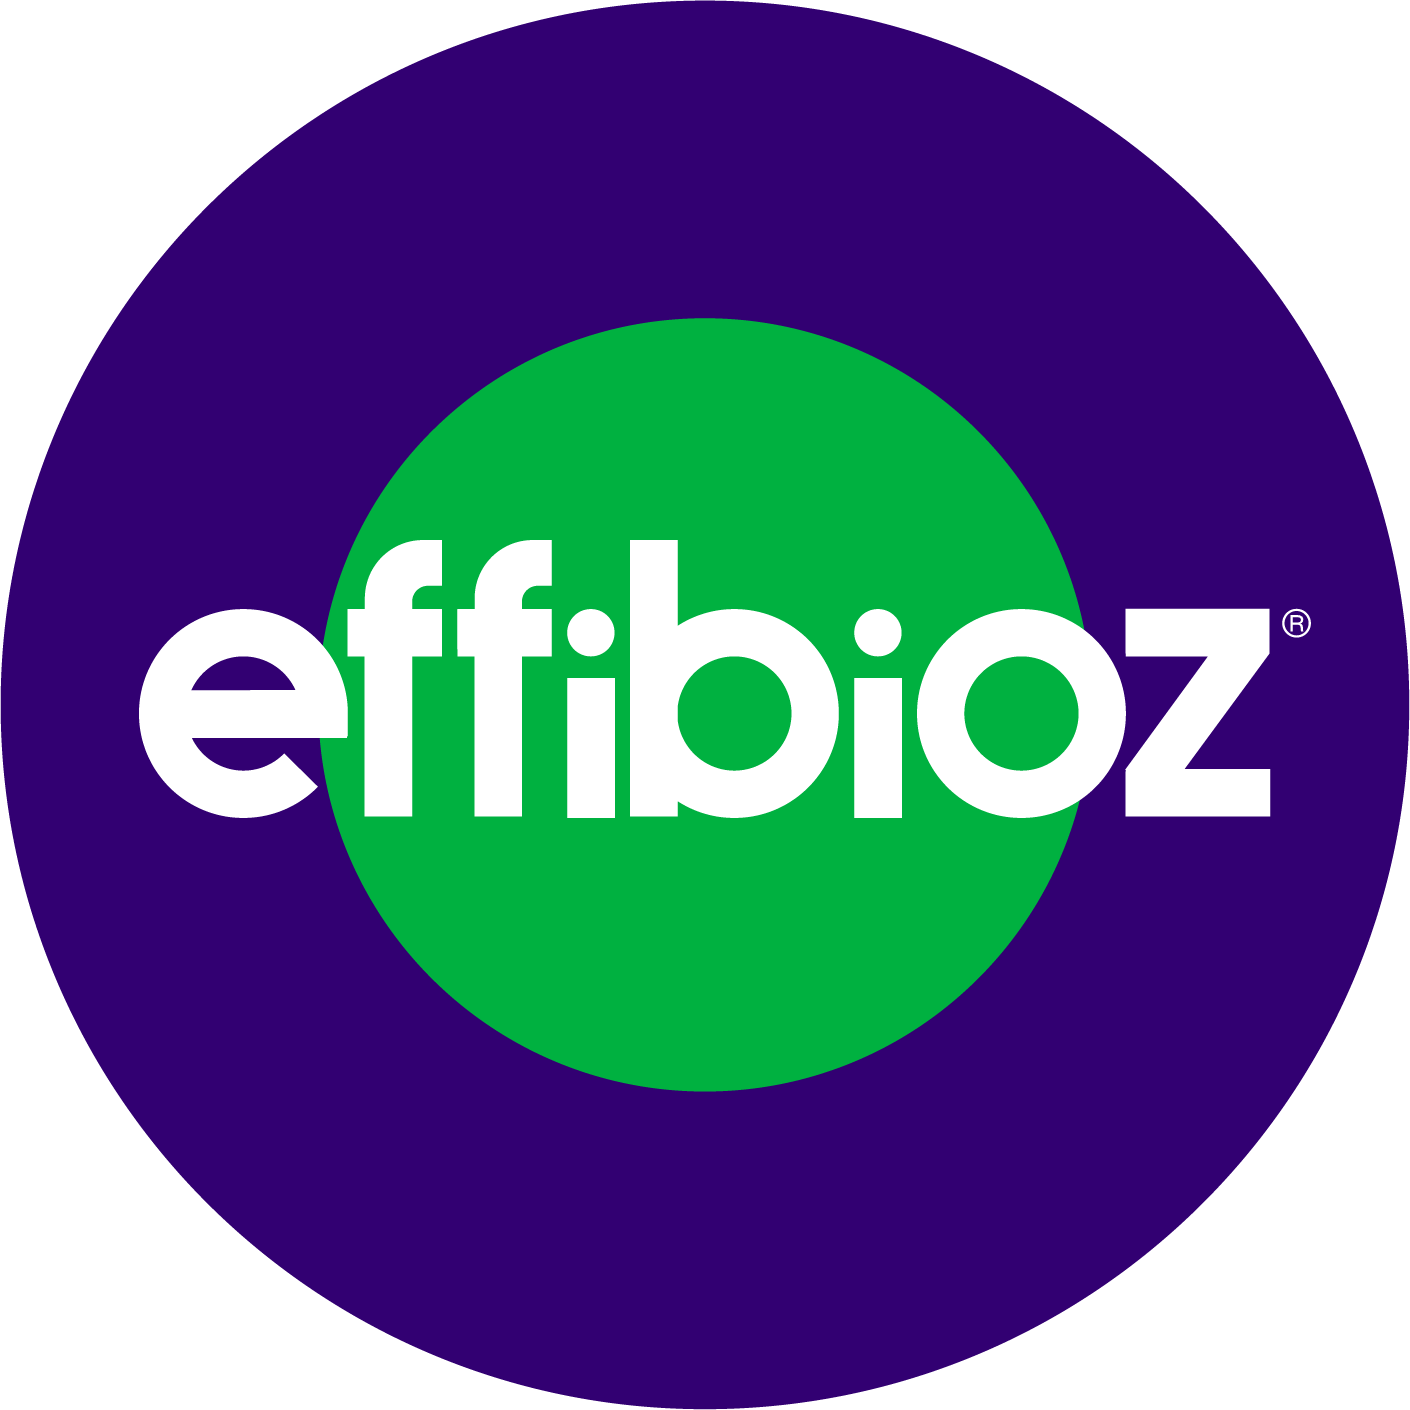 Logo Effibioz